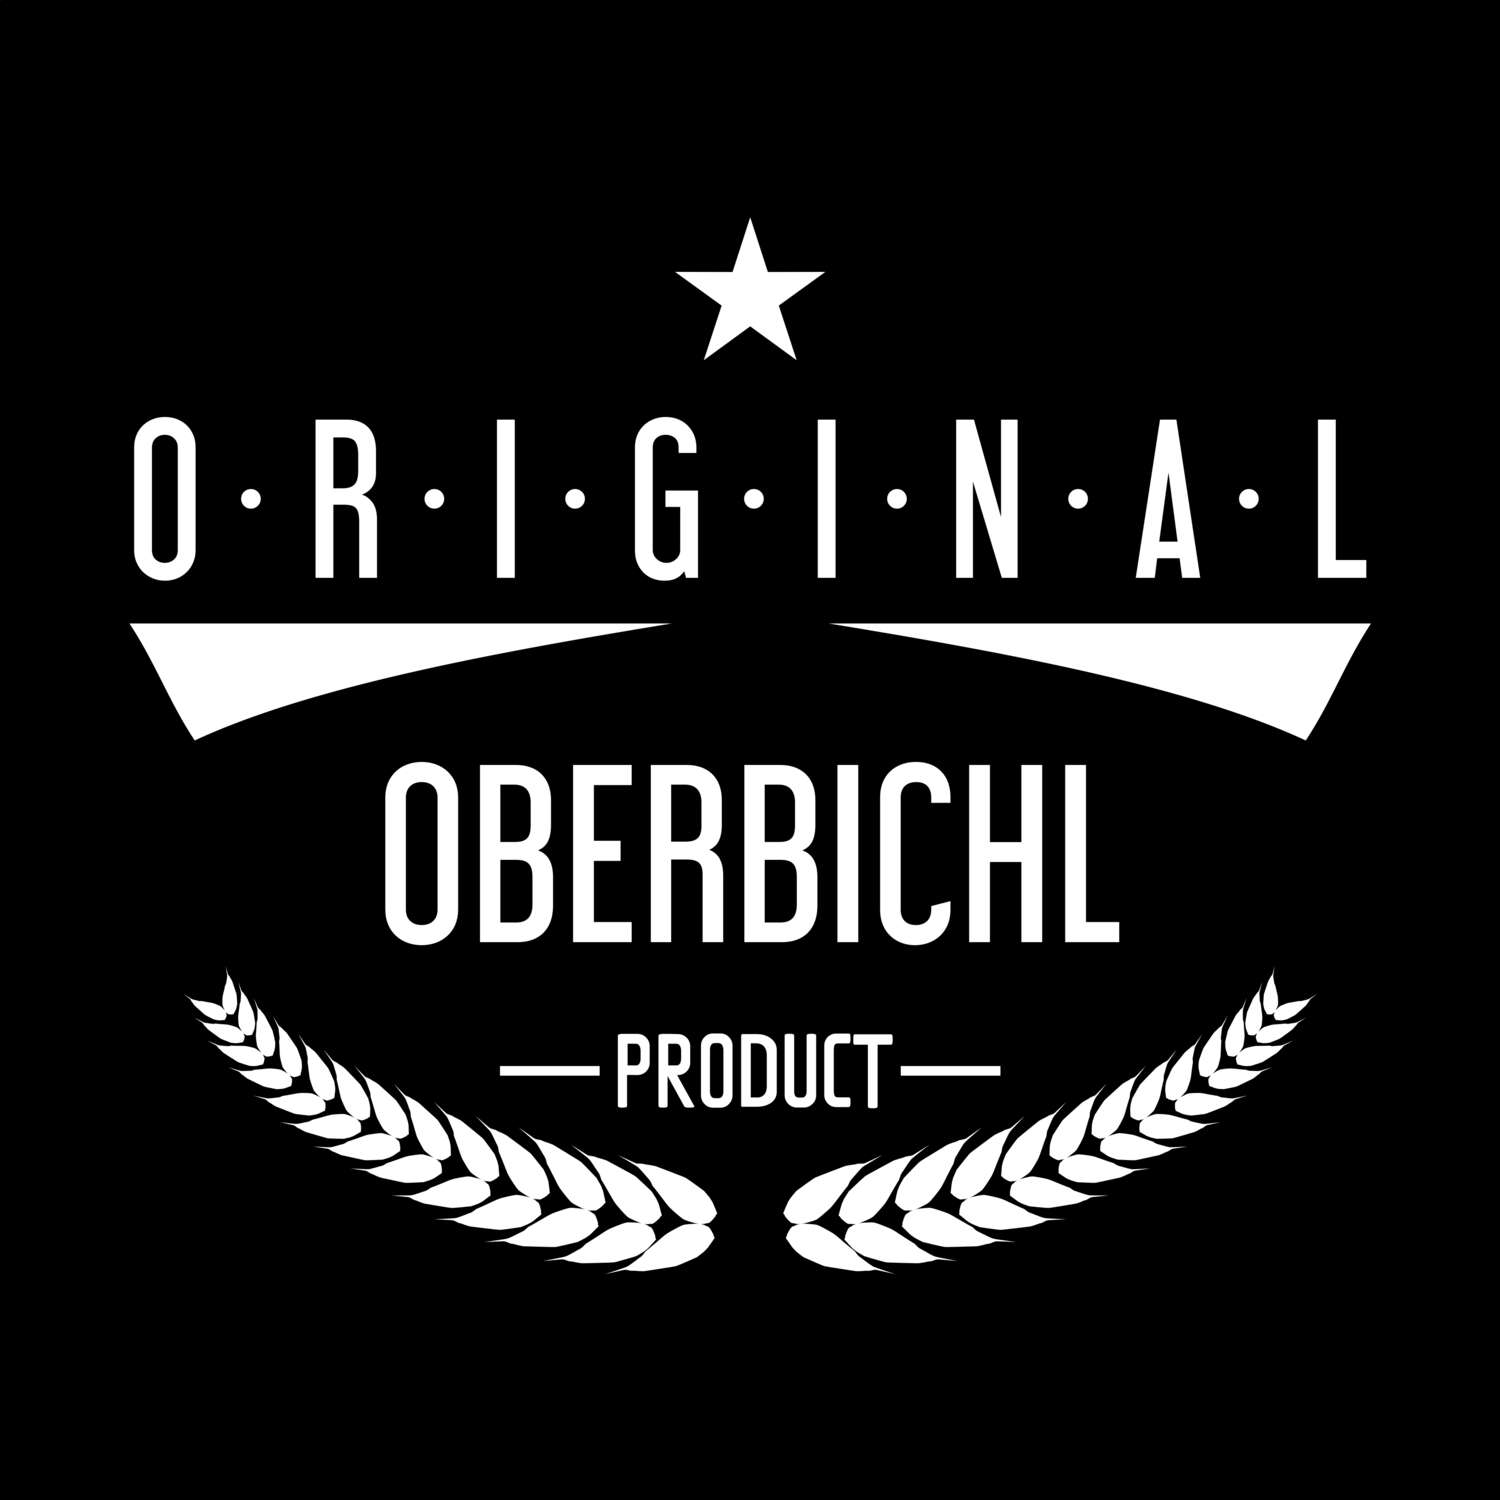 Oberbichl T-Shirt »Original Product«